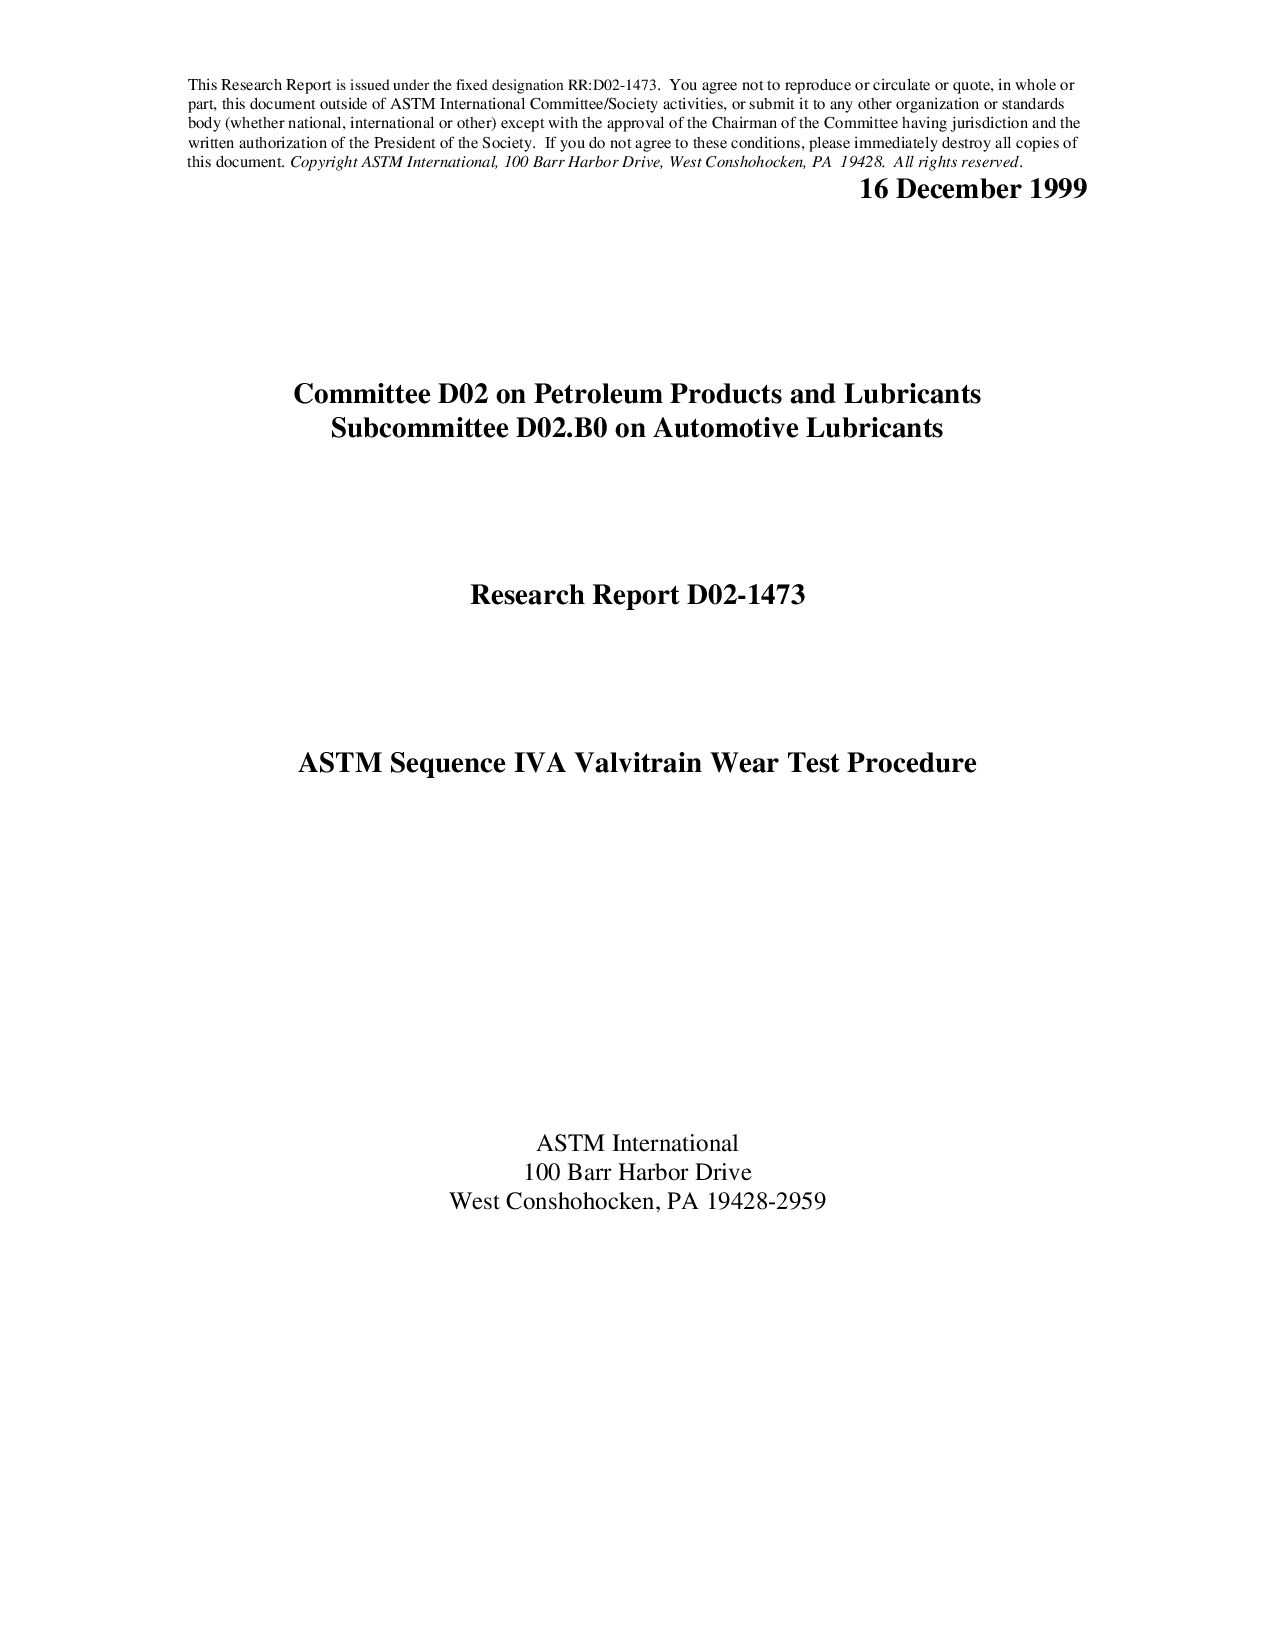 ASTM RR-D02-1473 1999封面图